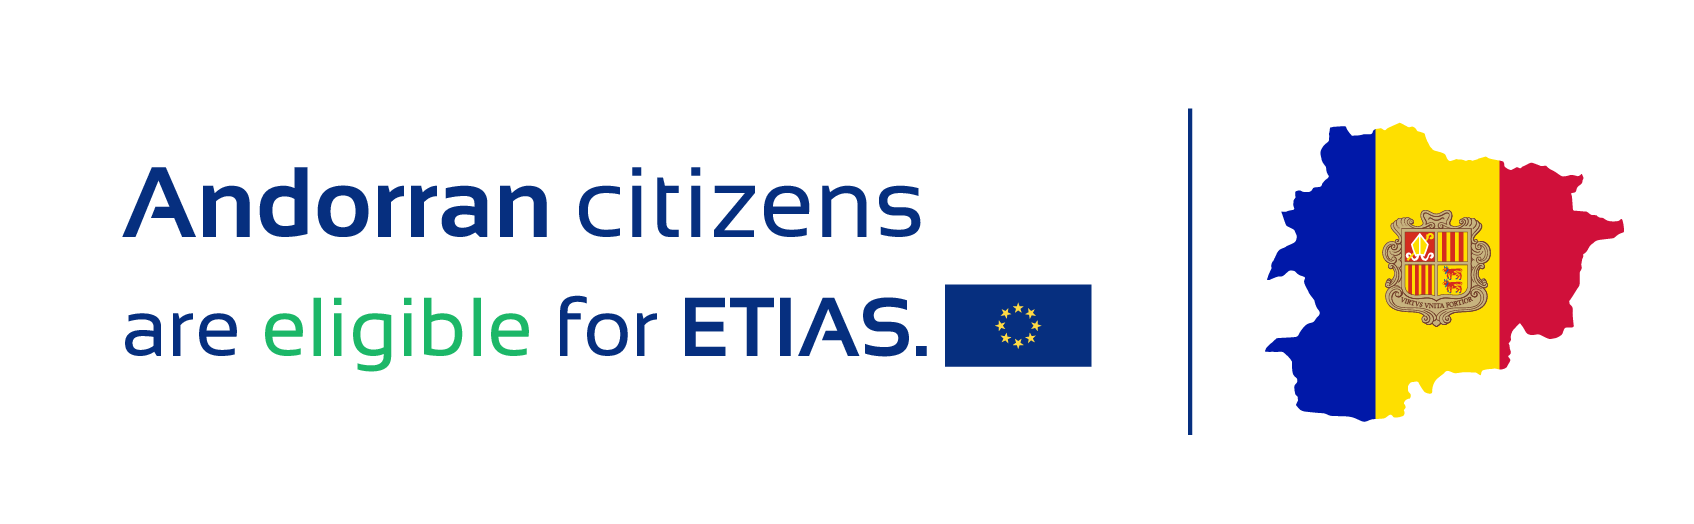 Andorran citizens are eligible for ETIAS